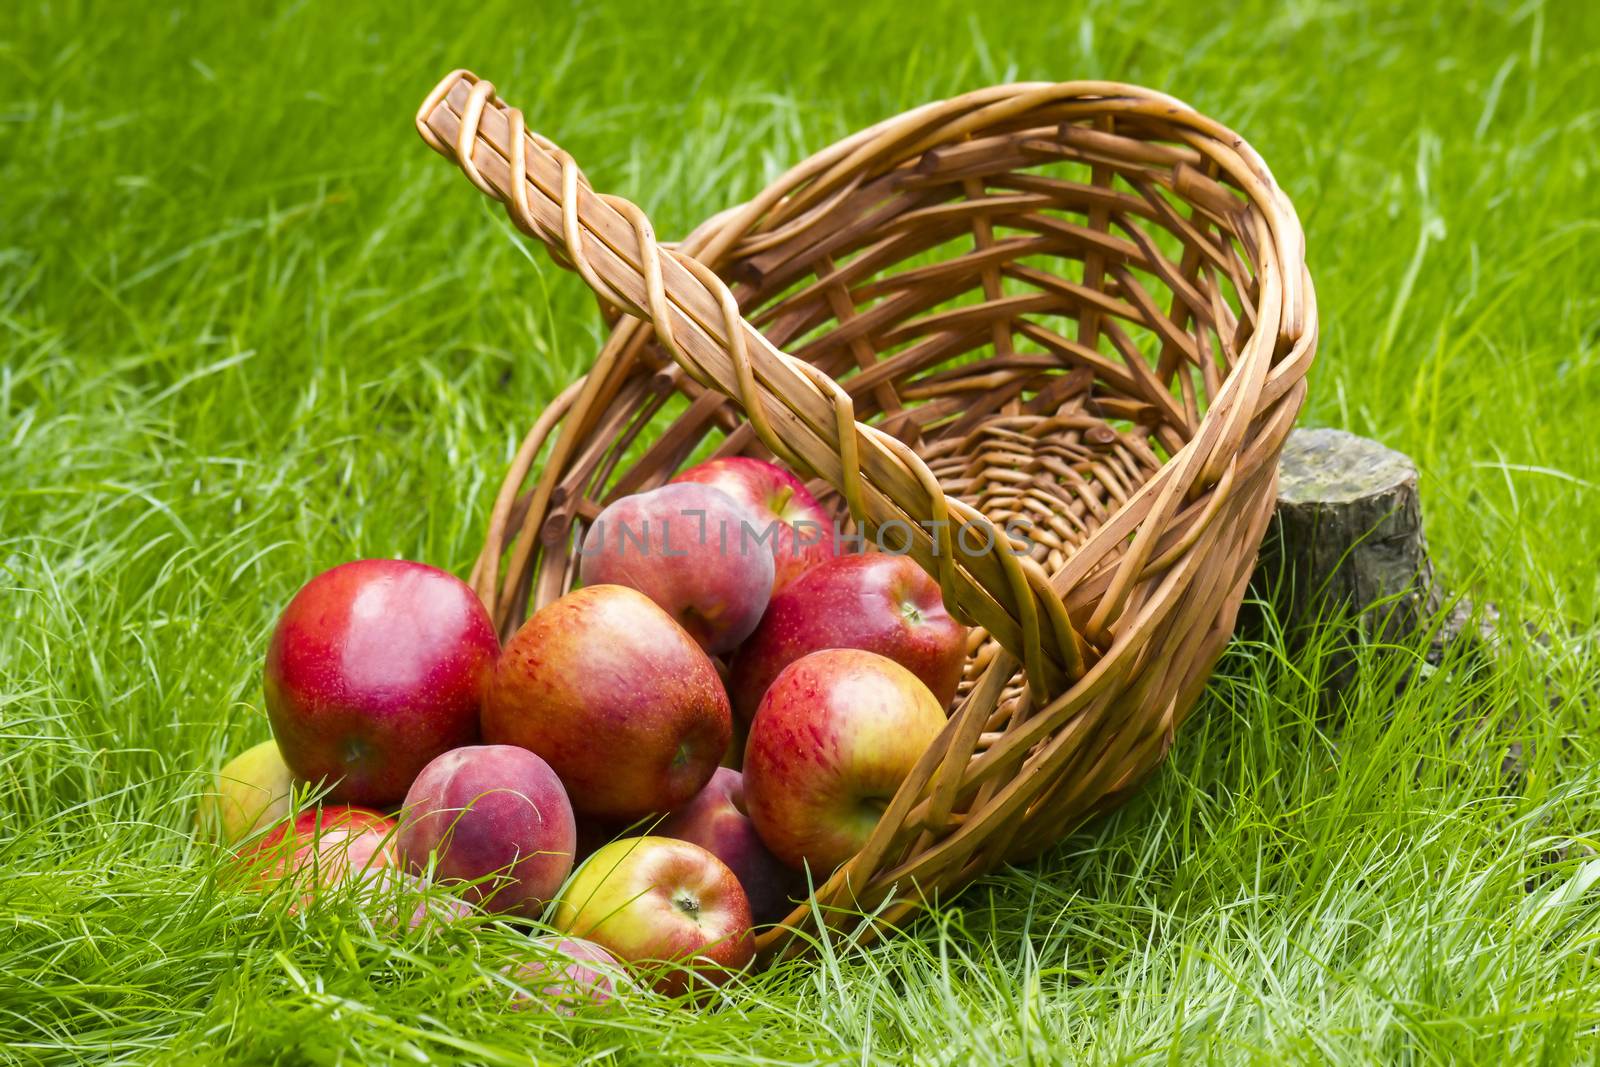 fruits in a basket in summer grass